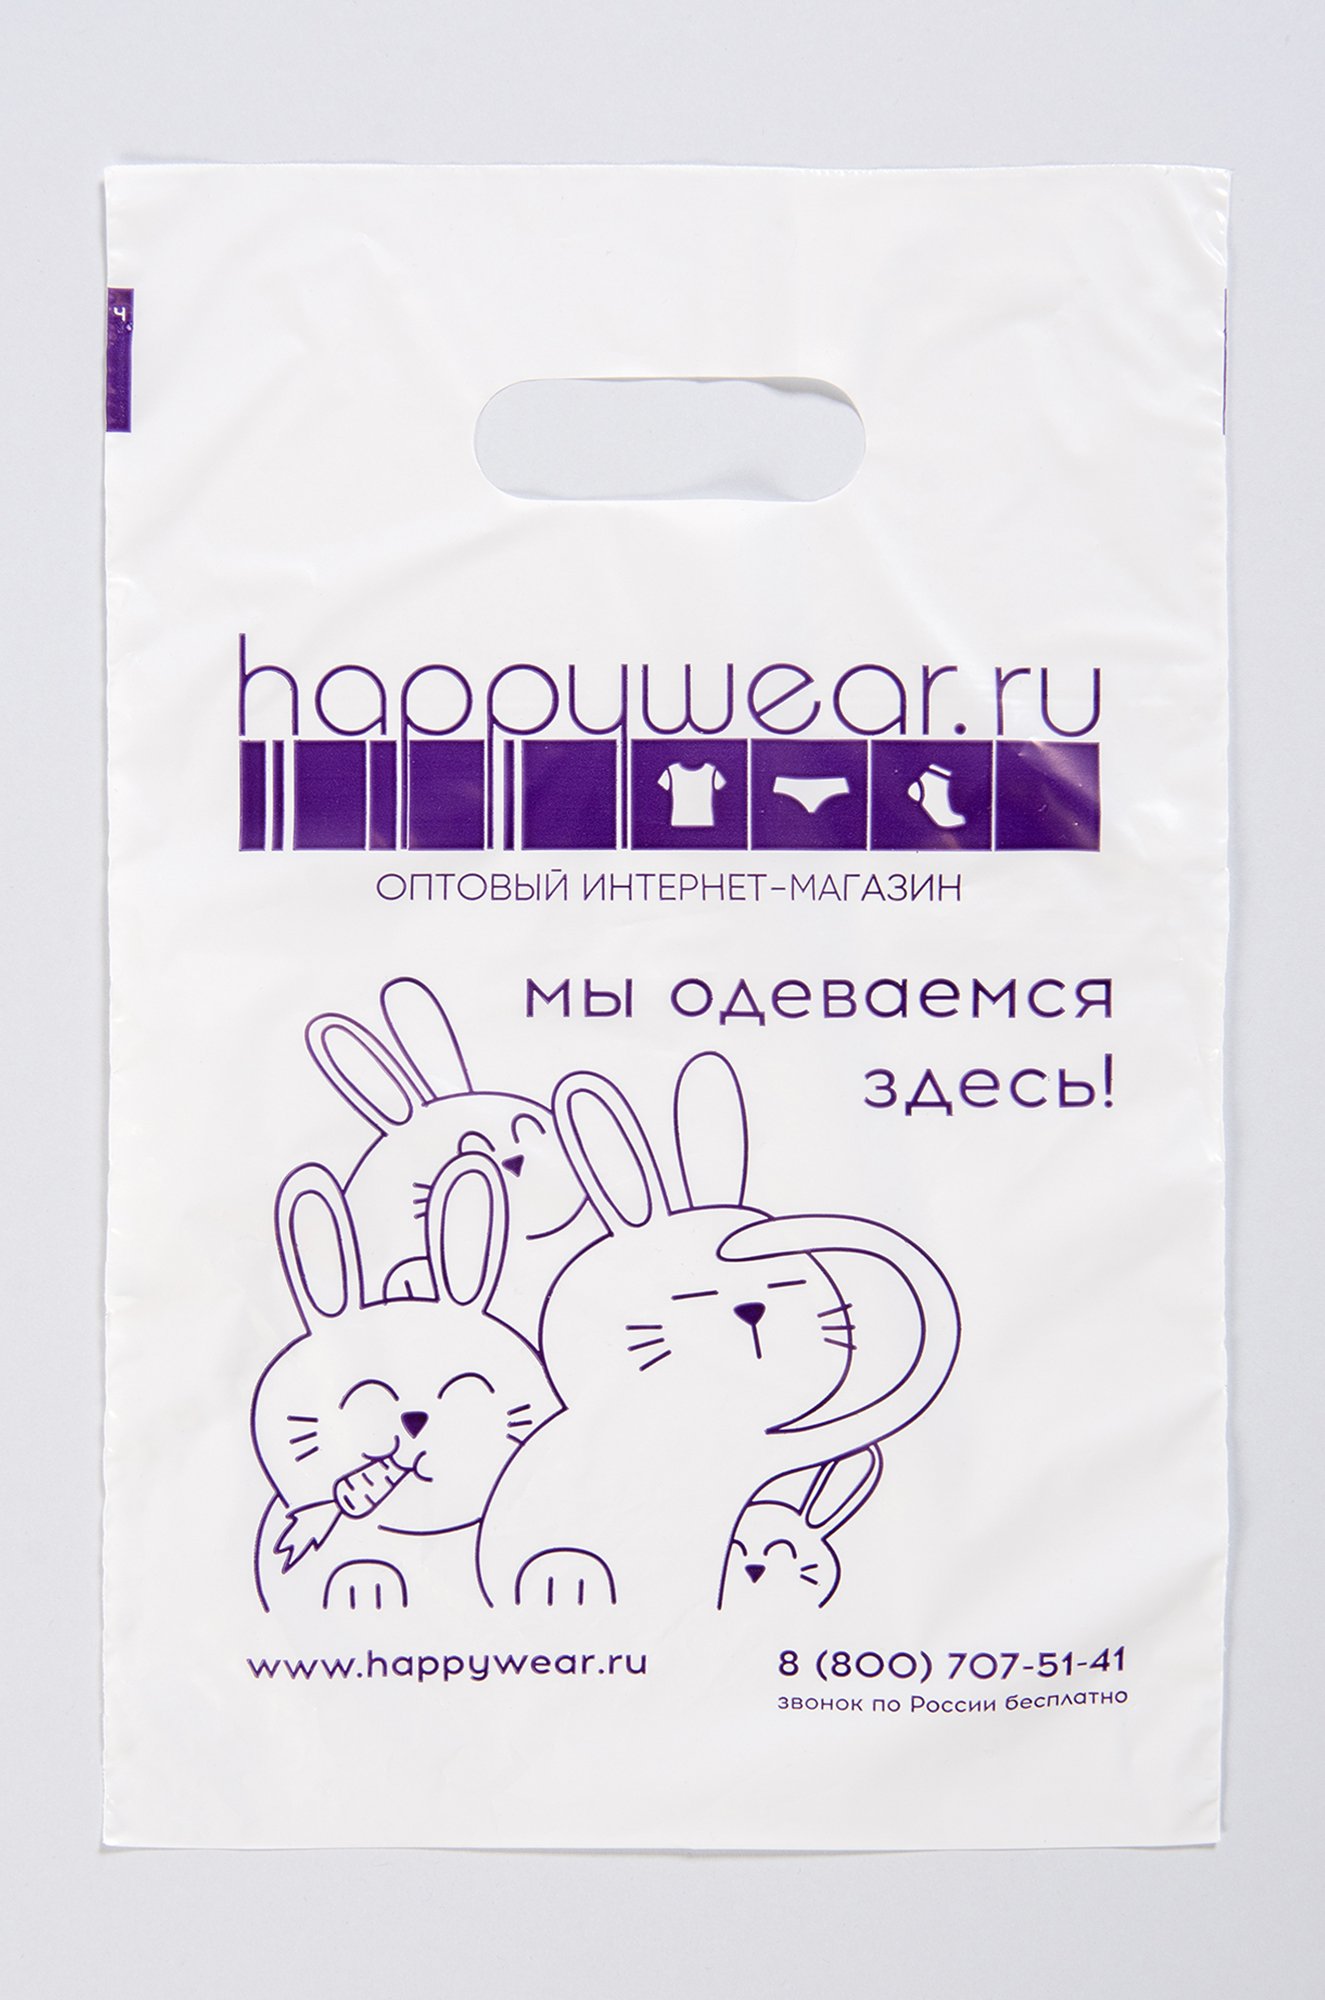 Happywear Ru Интернет Магазин